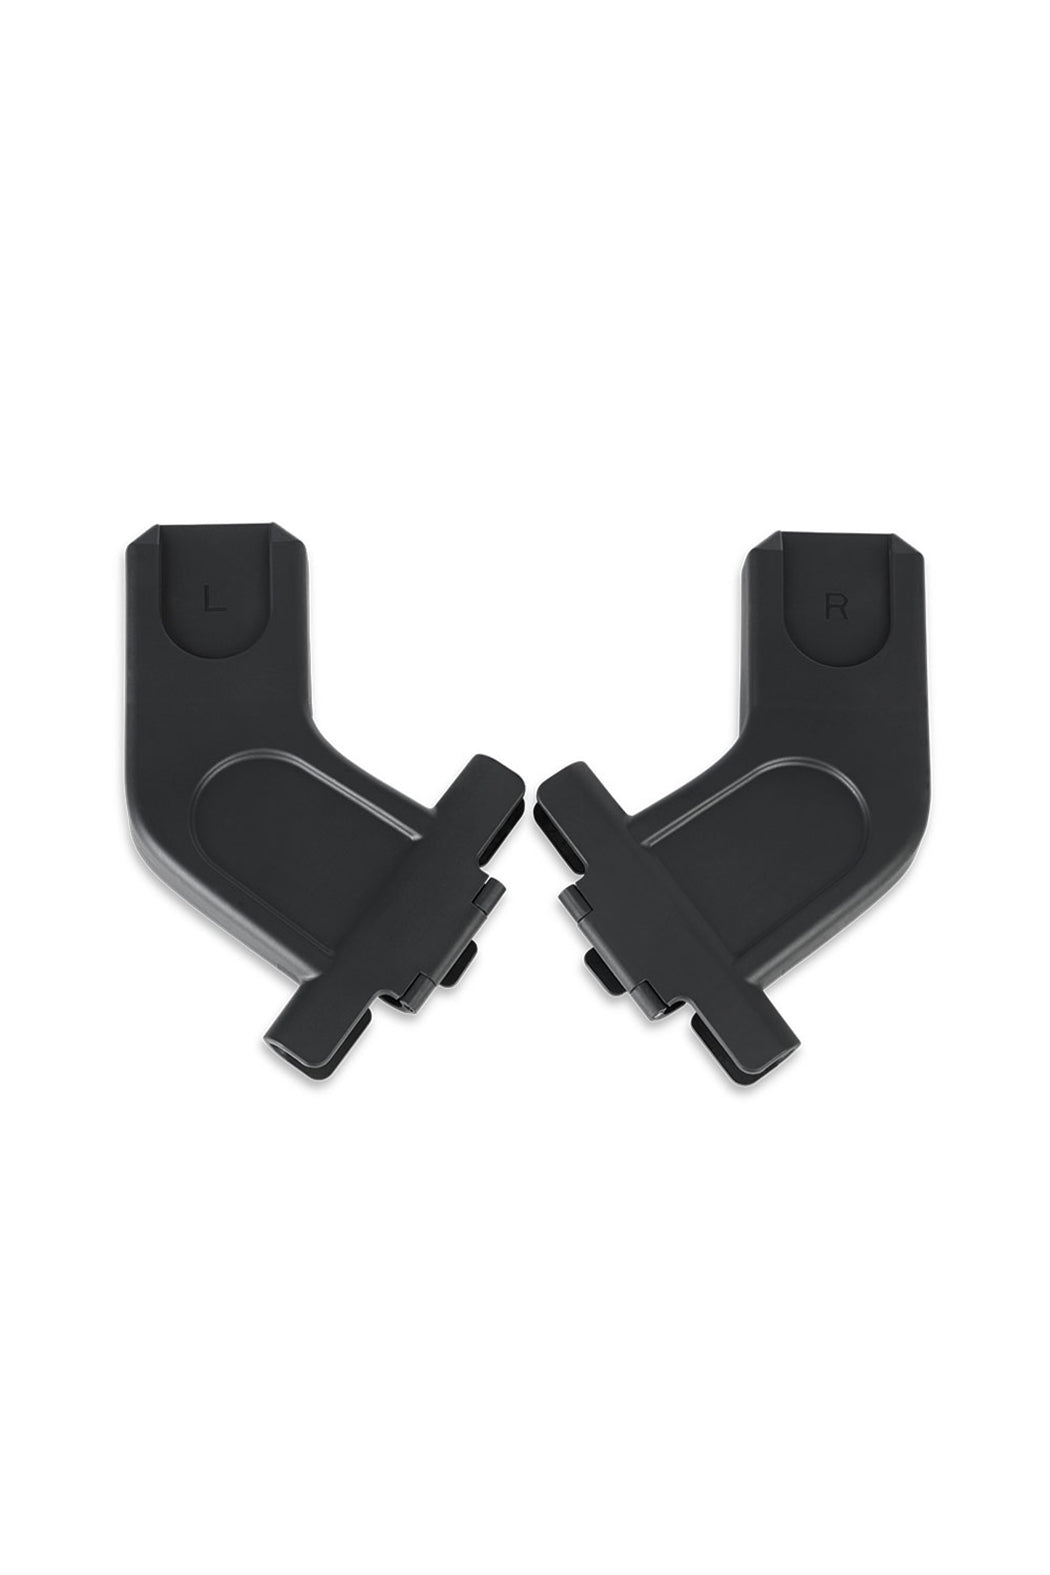 UPPAbaby Car Seat Adapters (Maxi-Cosi, nuna, Cybex, Besafe, Recaro, Joie) For MINU/MINU V2